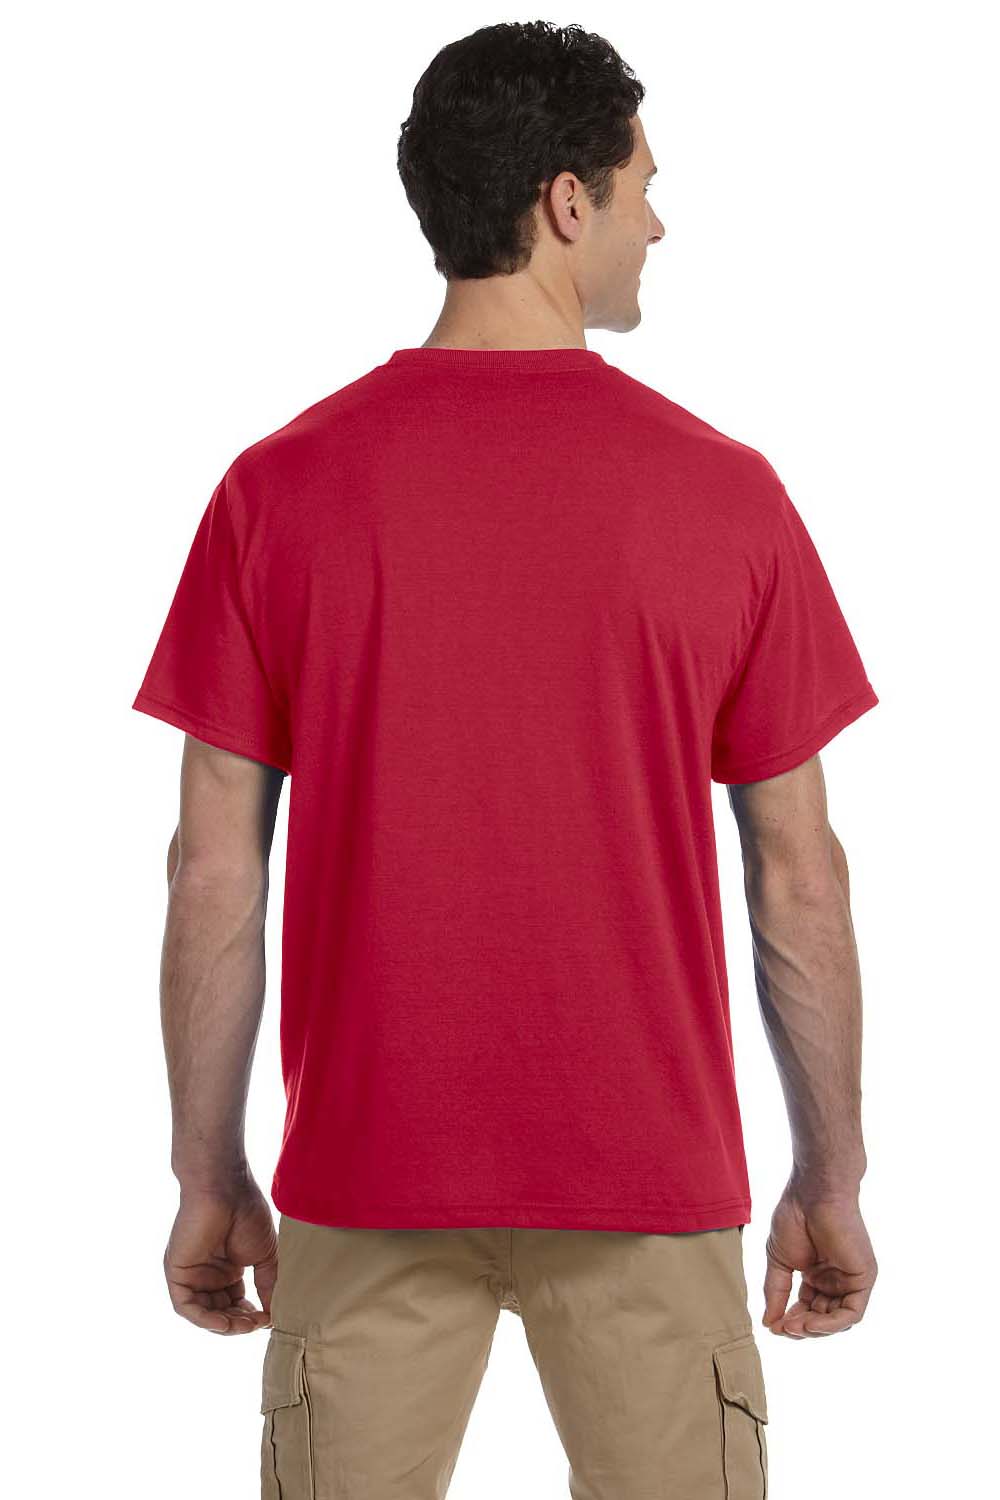 Jerzees 21M Mens Dri-Power Moisture Wicking Short Sleeve Crewneck T-Shirt Red Back